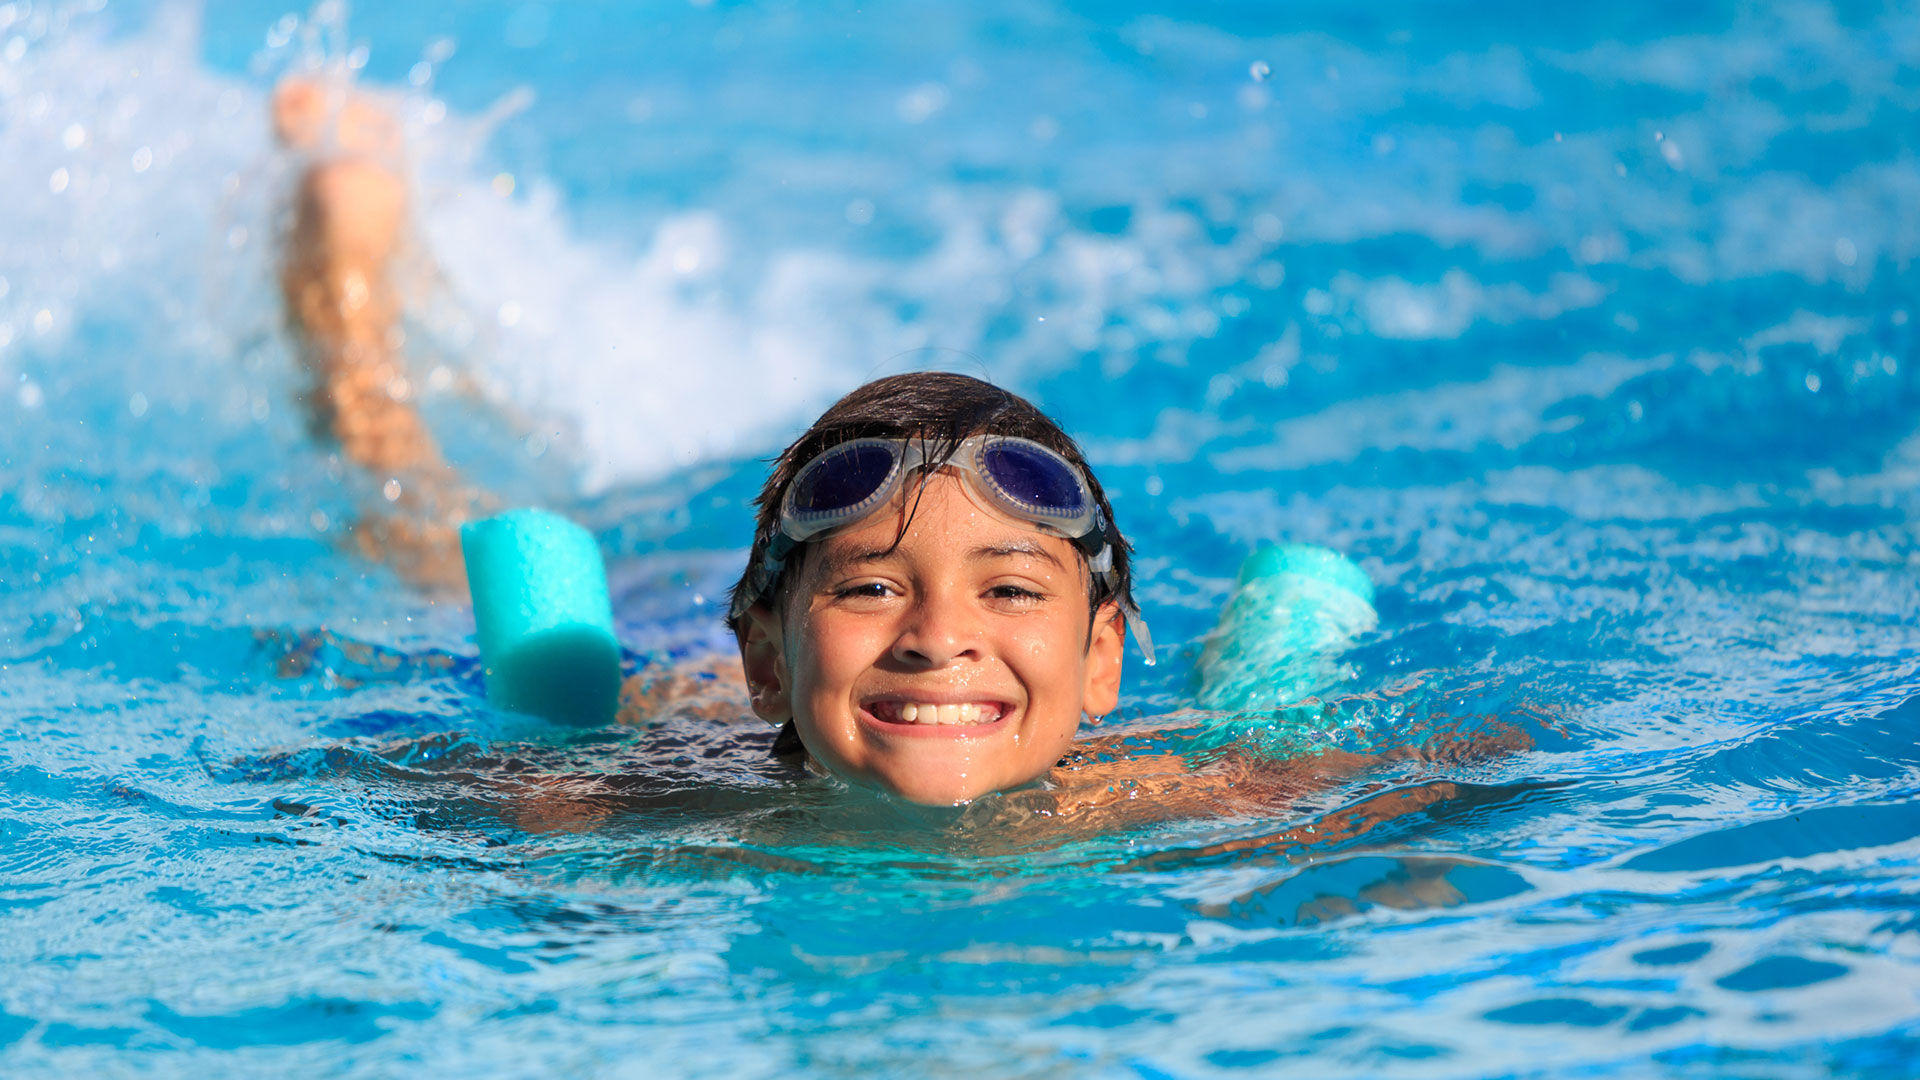 Enjoy summer with waterproof hearing aids